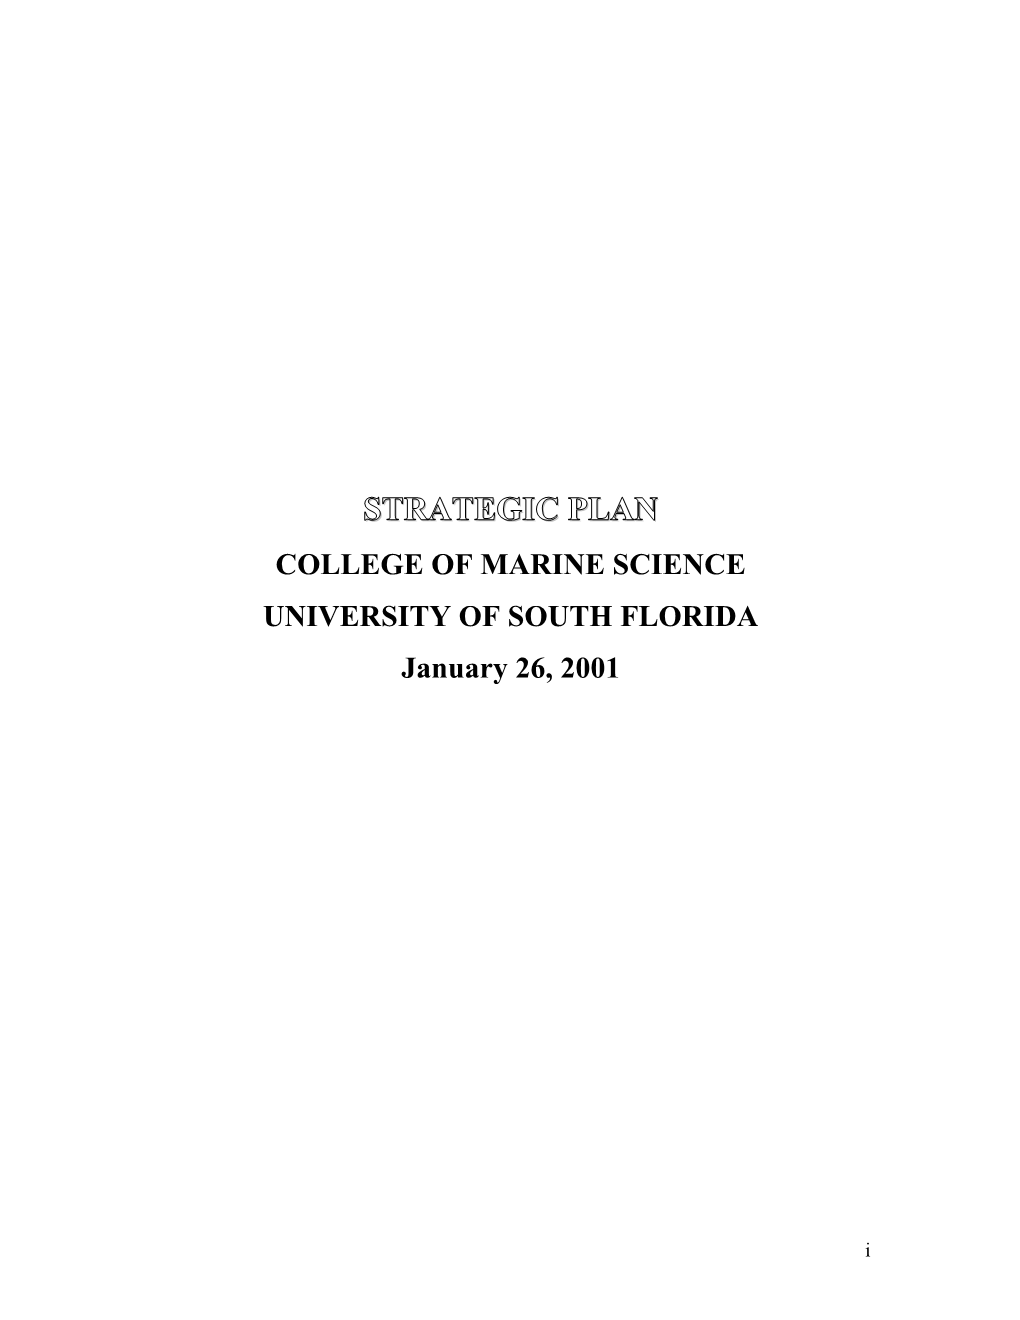 University of South Florida s2